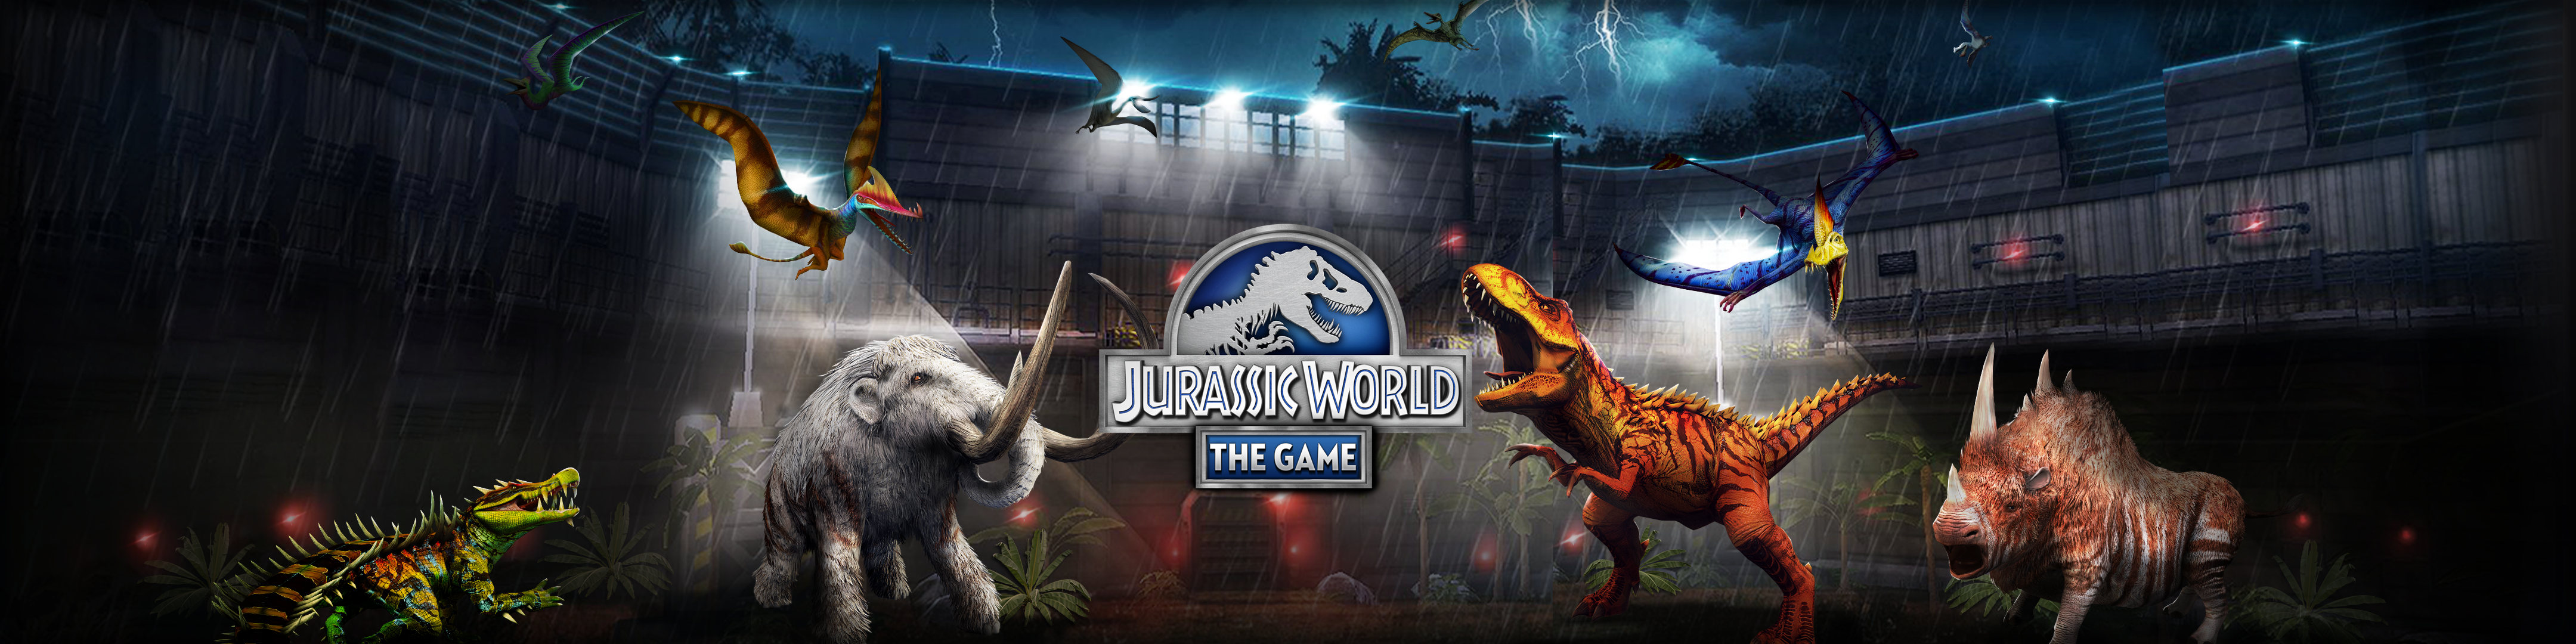 World code jurassic vip Jurassic World